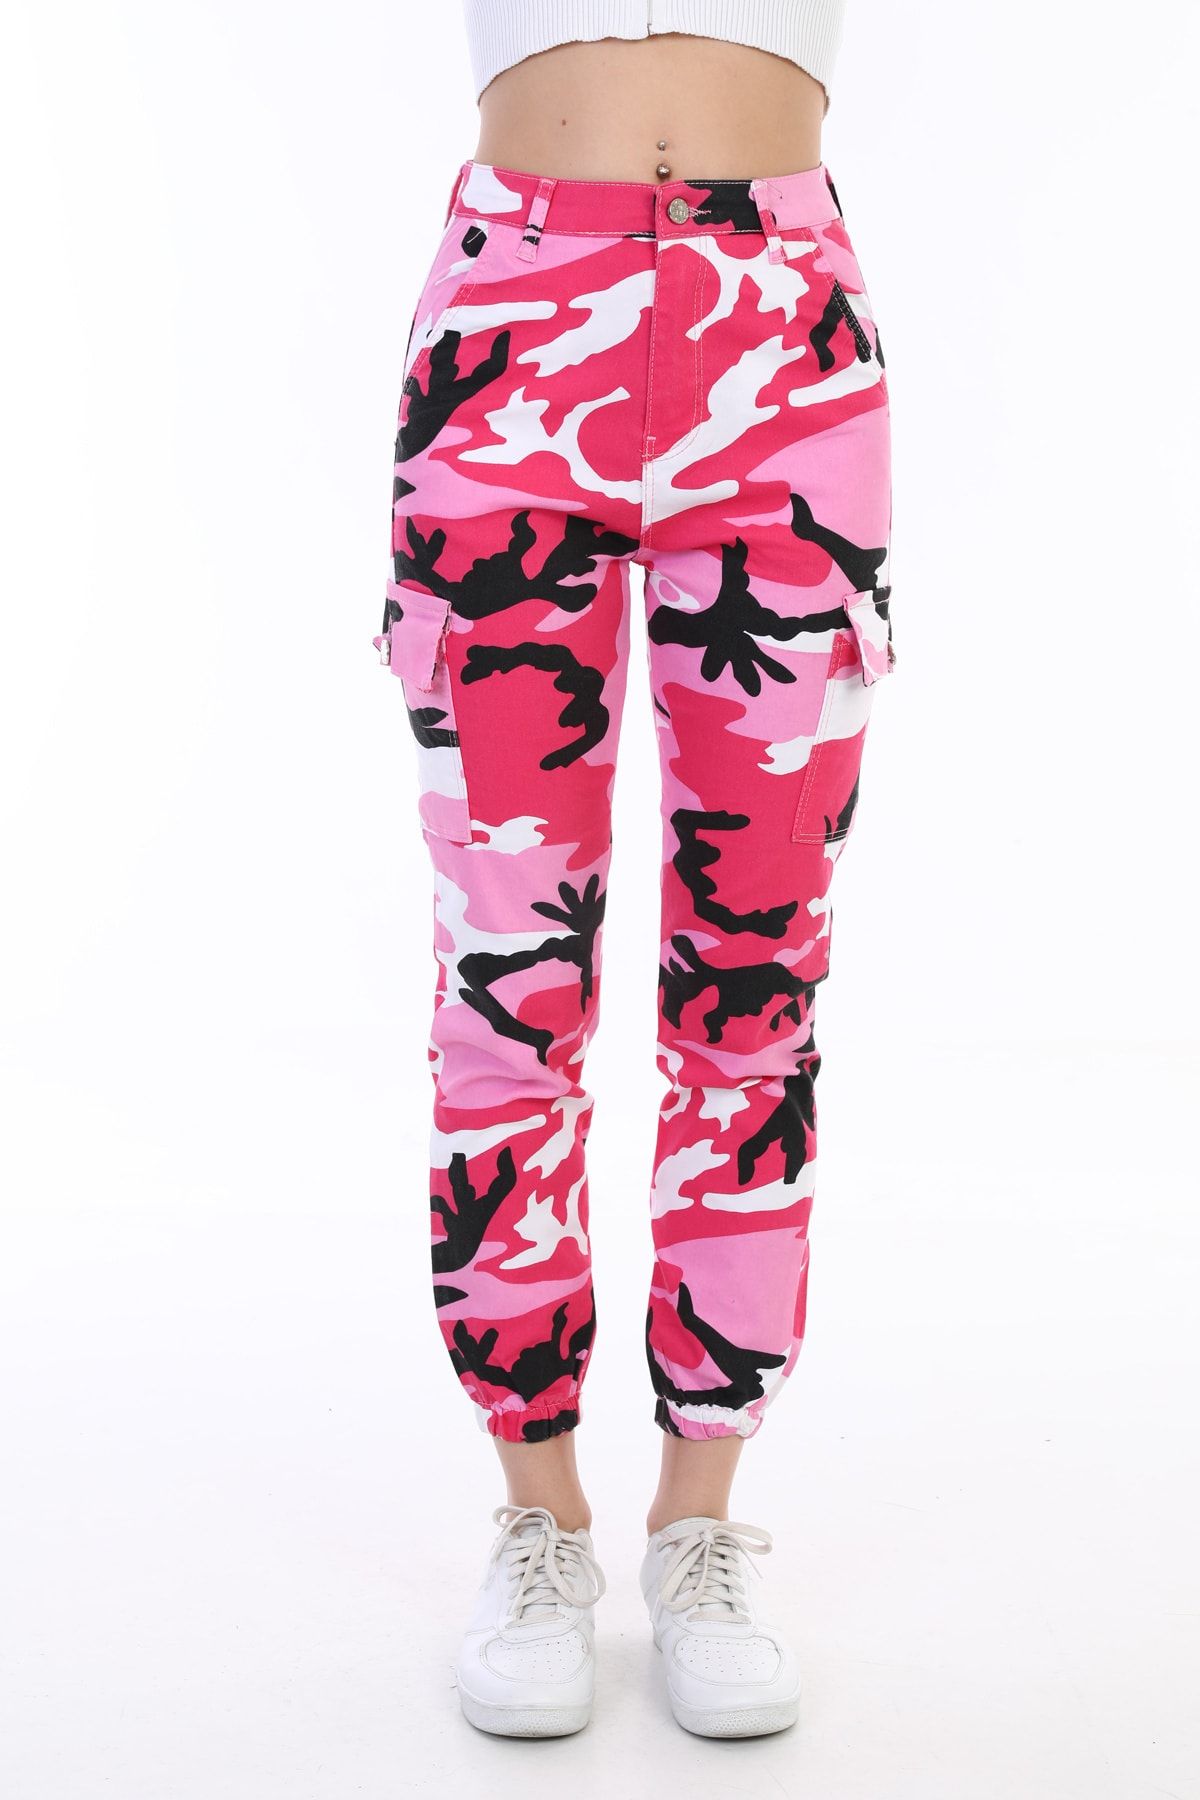 BİKELİFE Pink Camouflage Pattern Gabardine Leggings Trousers - Trendyol